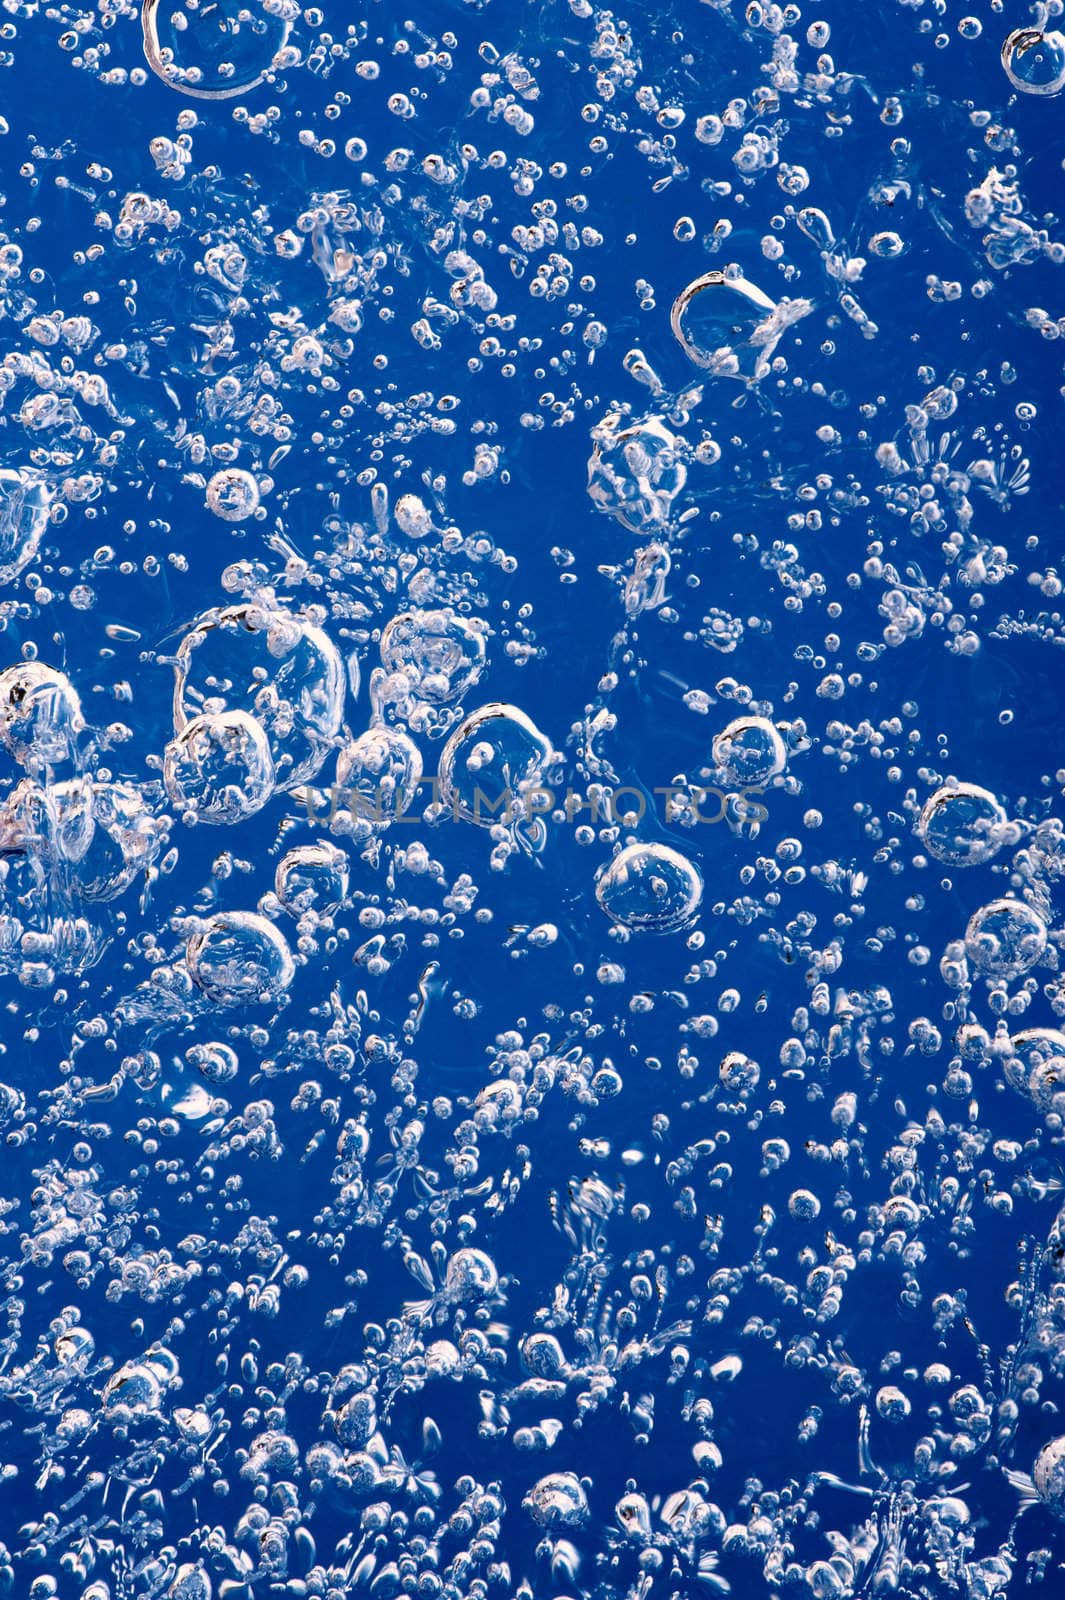 Air bubbles by Kamensky